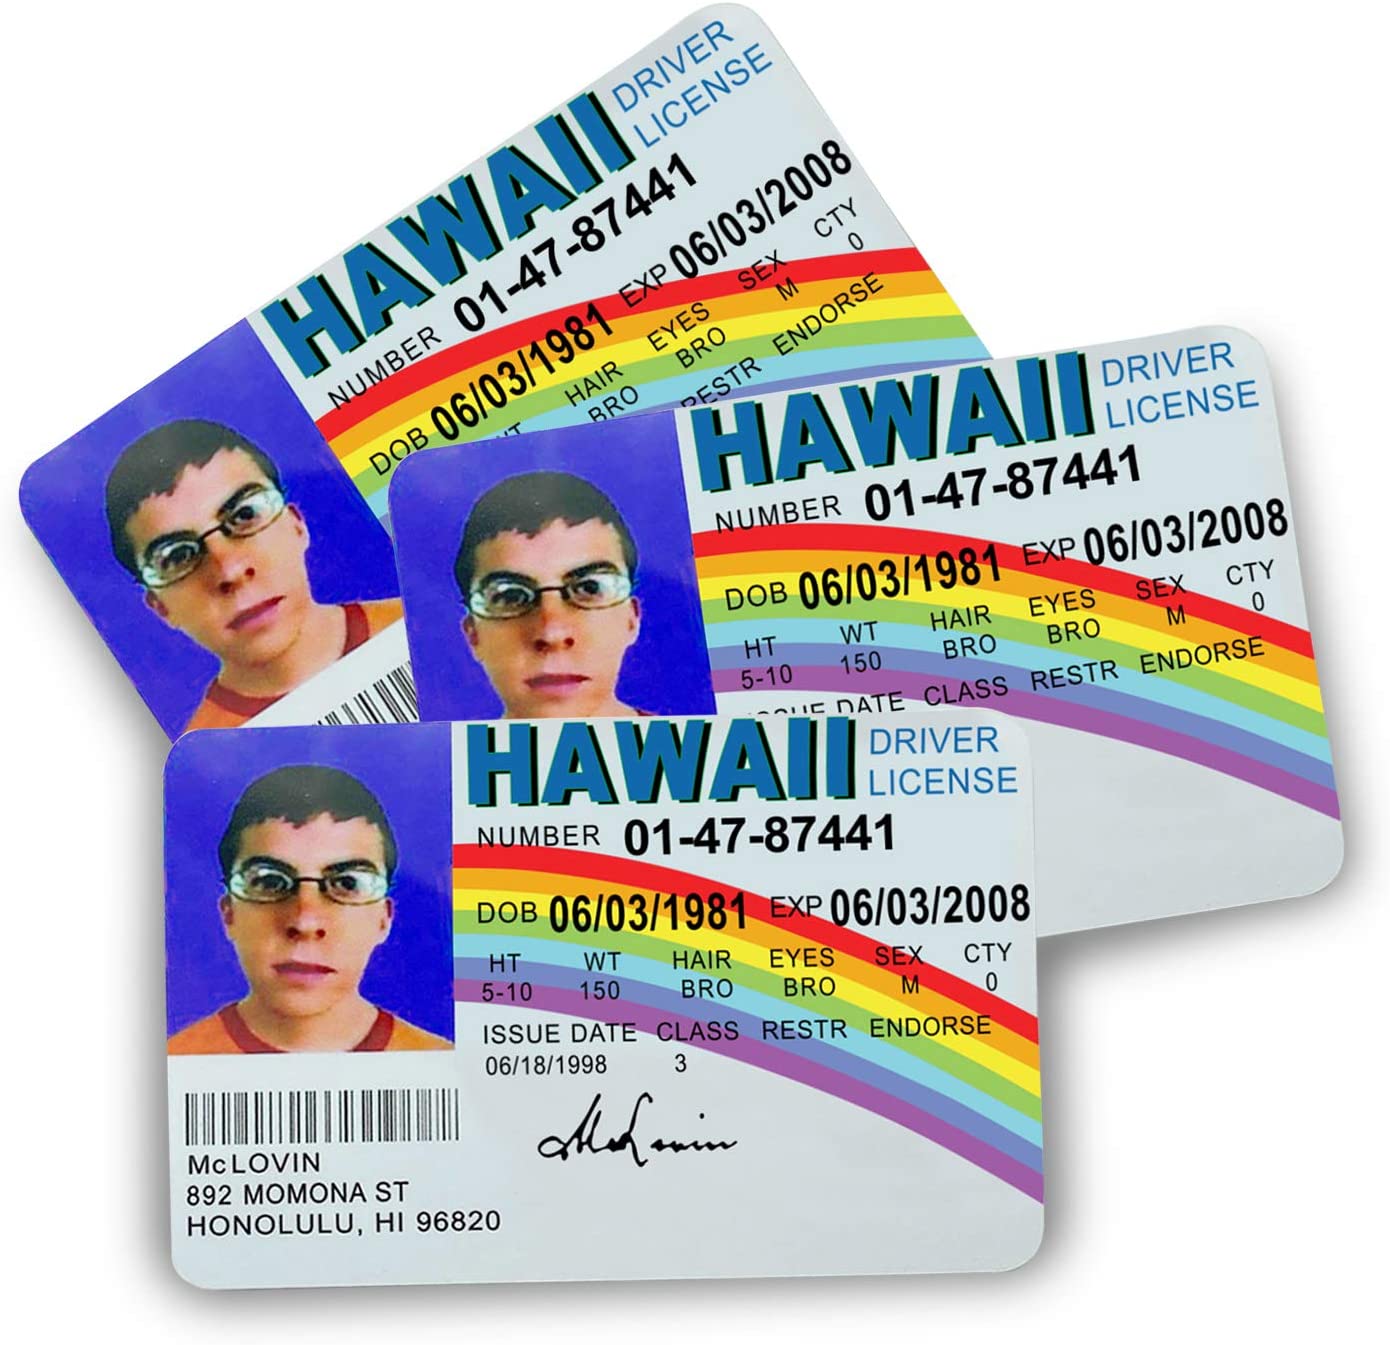 3pack McLovin ID Card McLovin Fun Fake ID License Card -Superbad Fake Joke ID License - Funny Gag Gift Prank - ID McLovin ID Cards1 Pack - Fake ID License - Funny Gag Gift Prank - ID McLovin ID Cards